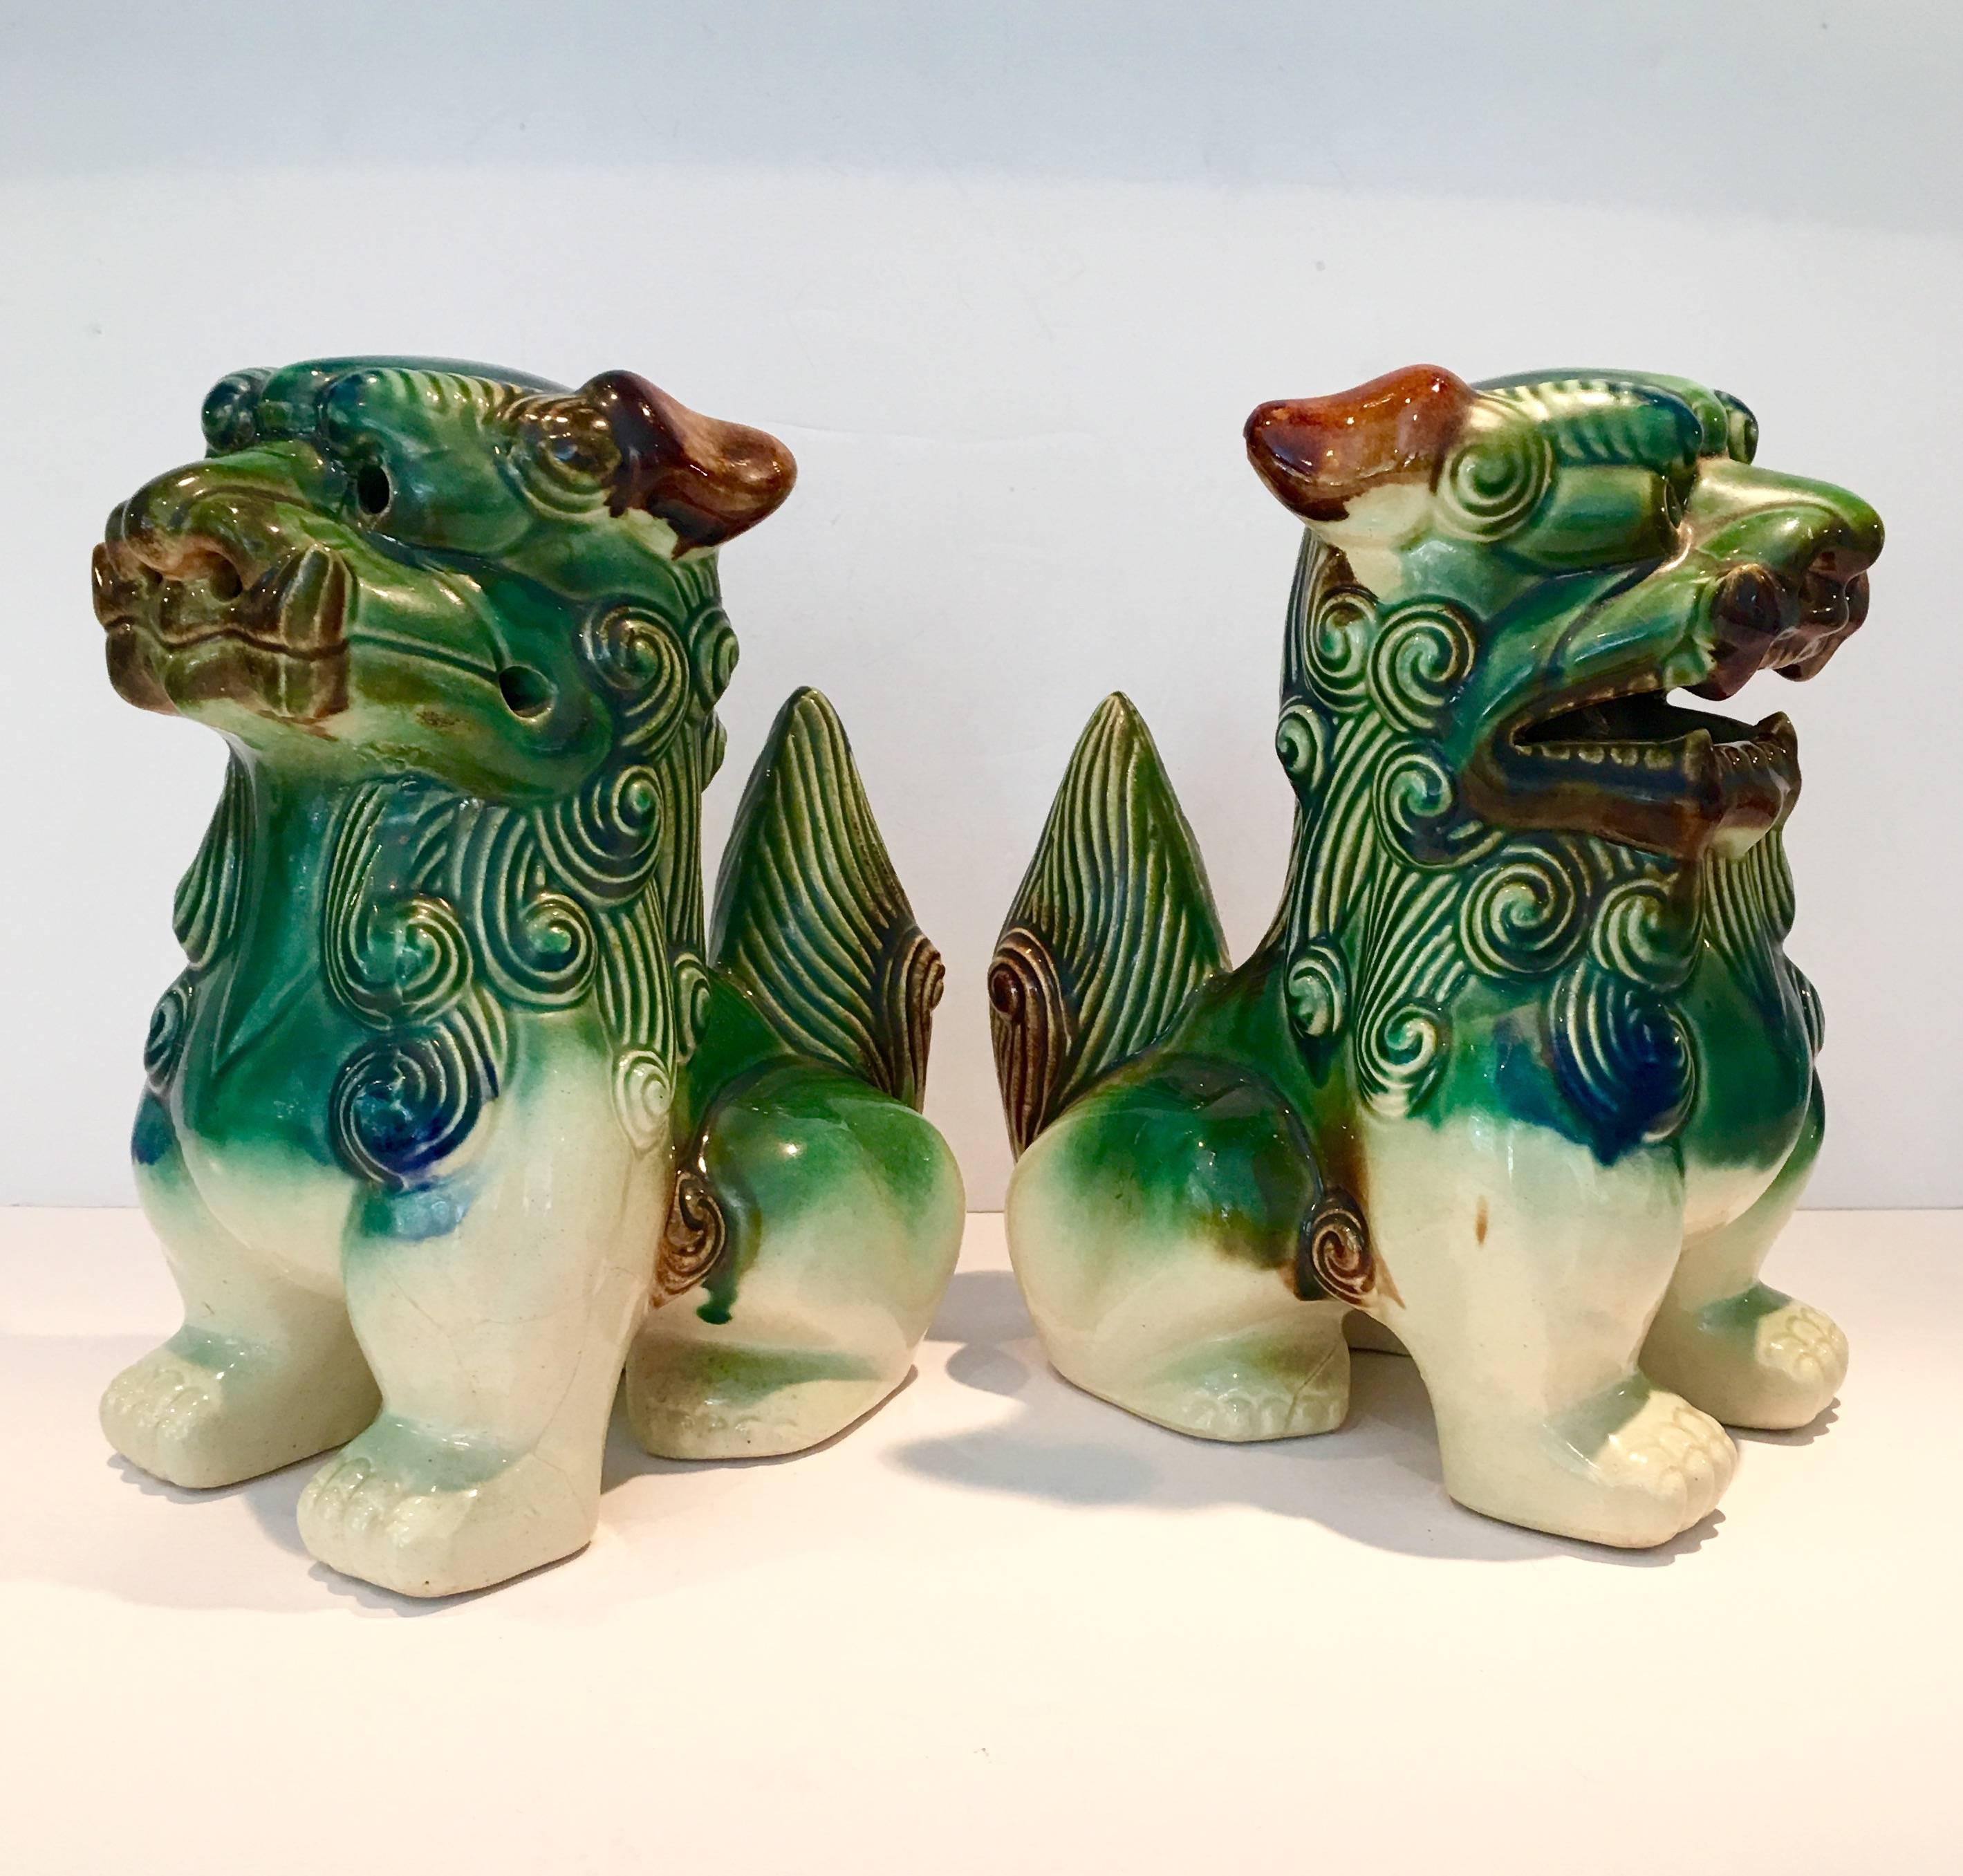 Vintage pair of Chinese ceramic glaze polychrome foo dogs.
       